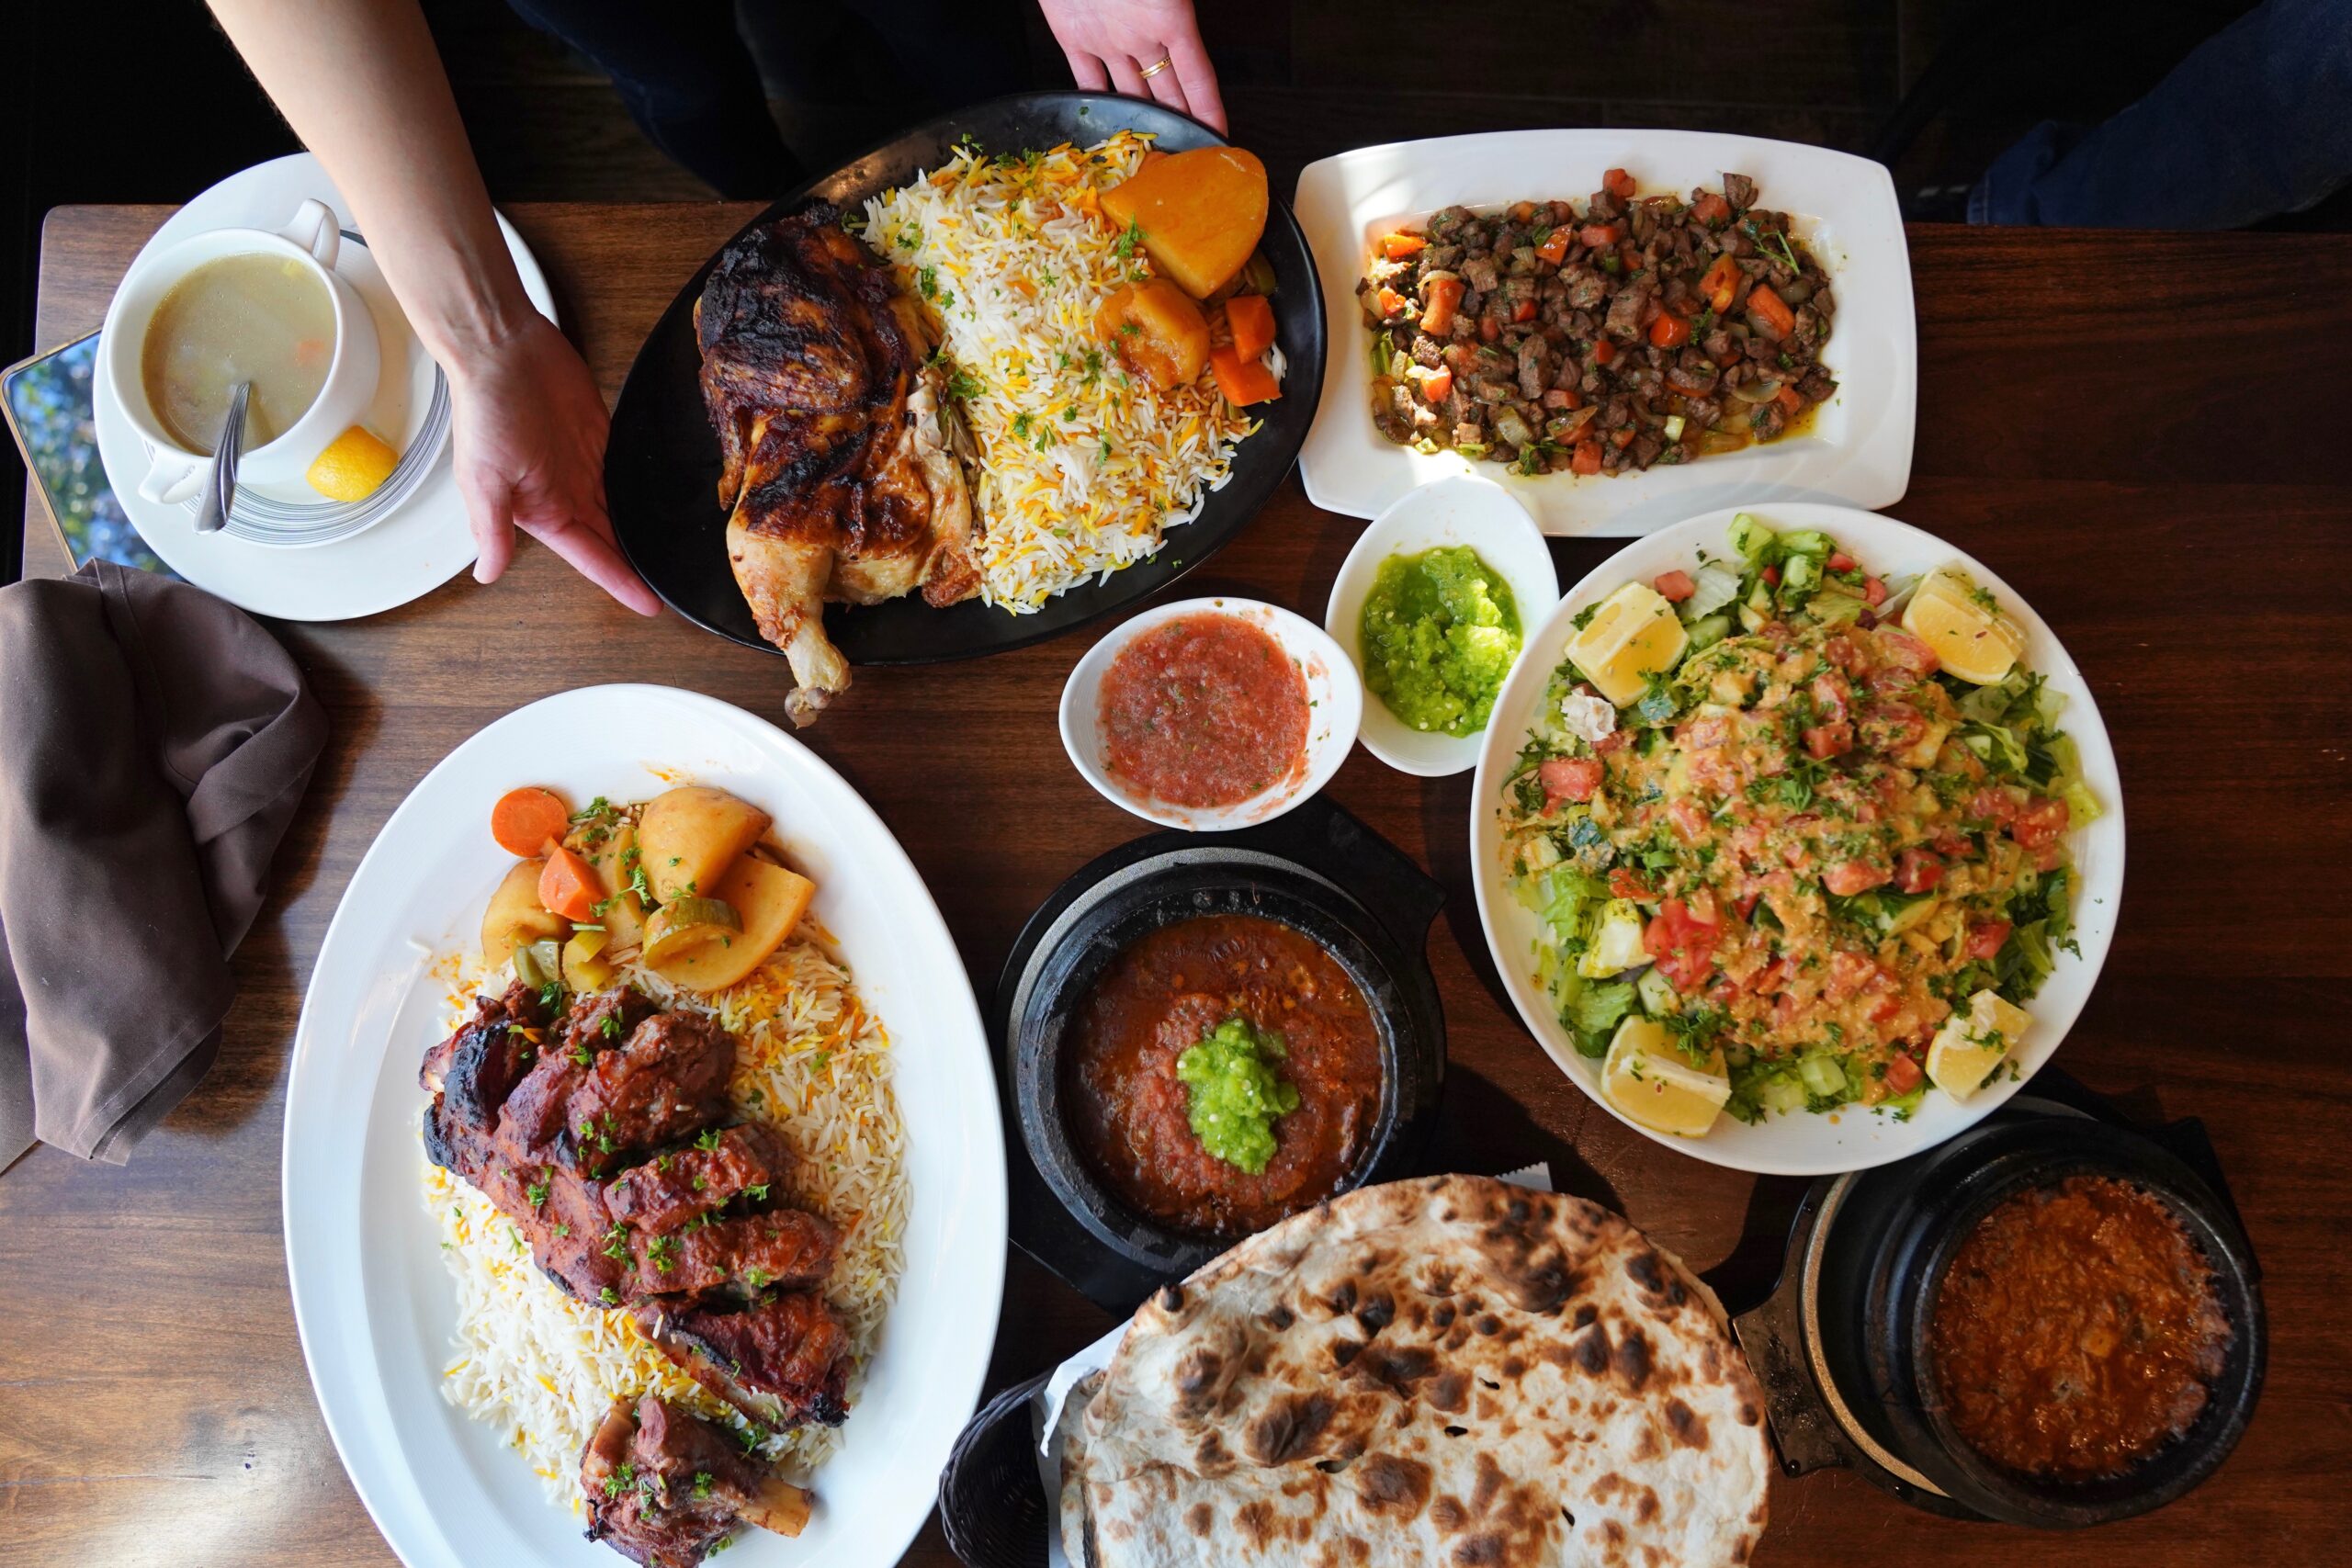 Sheeba customers receive large portions. PHOTO: Catherine Sareini